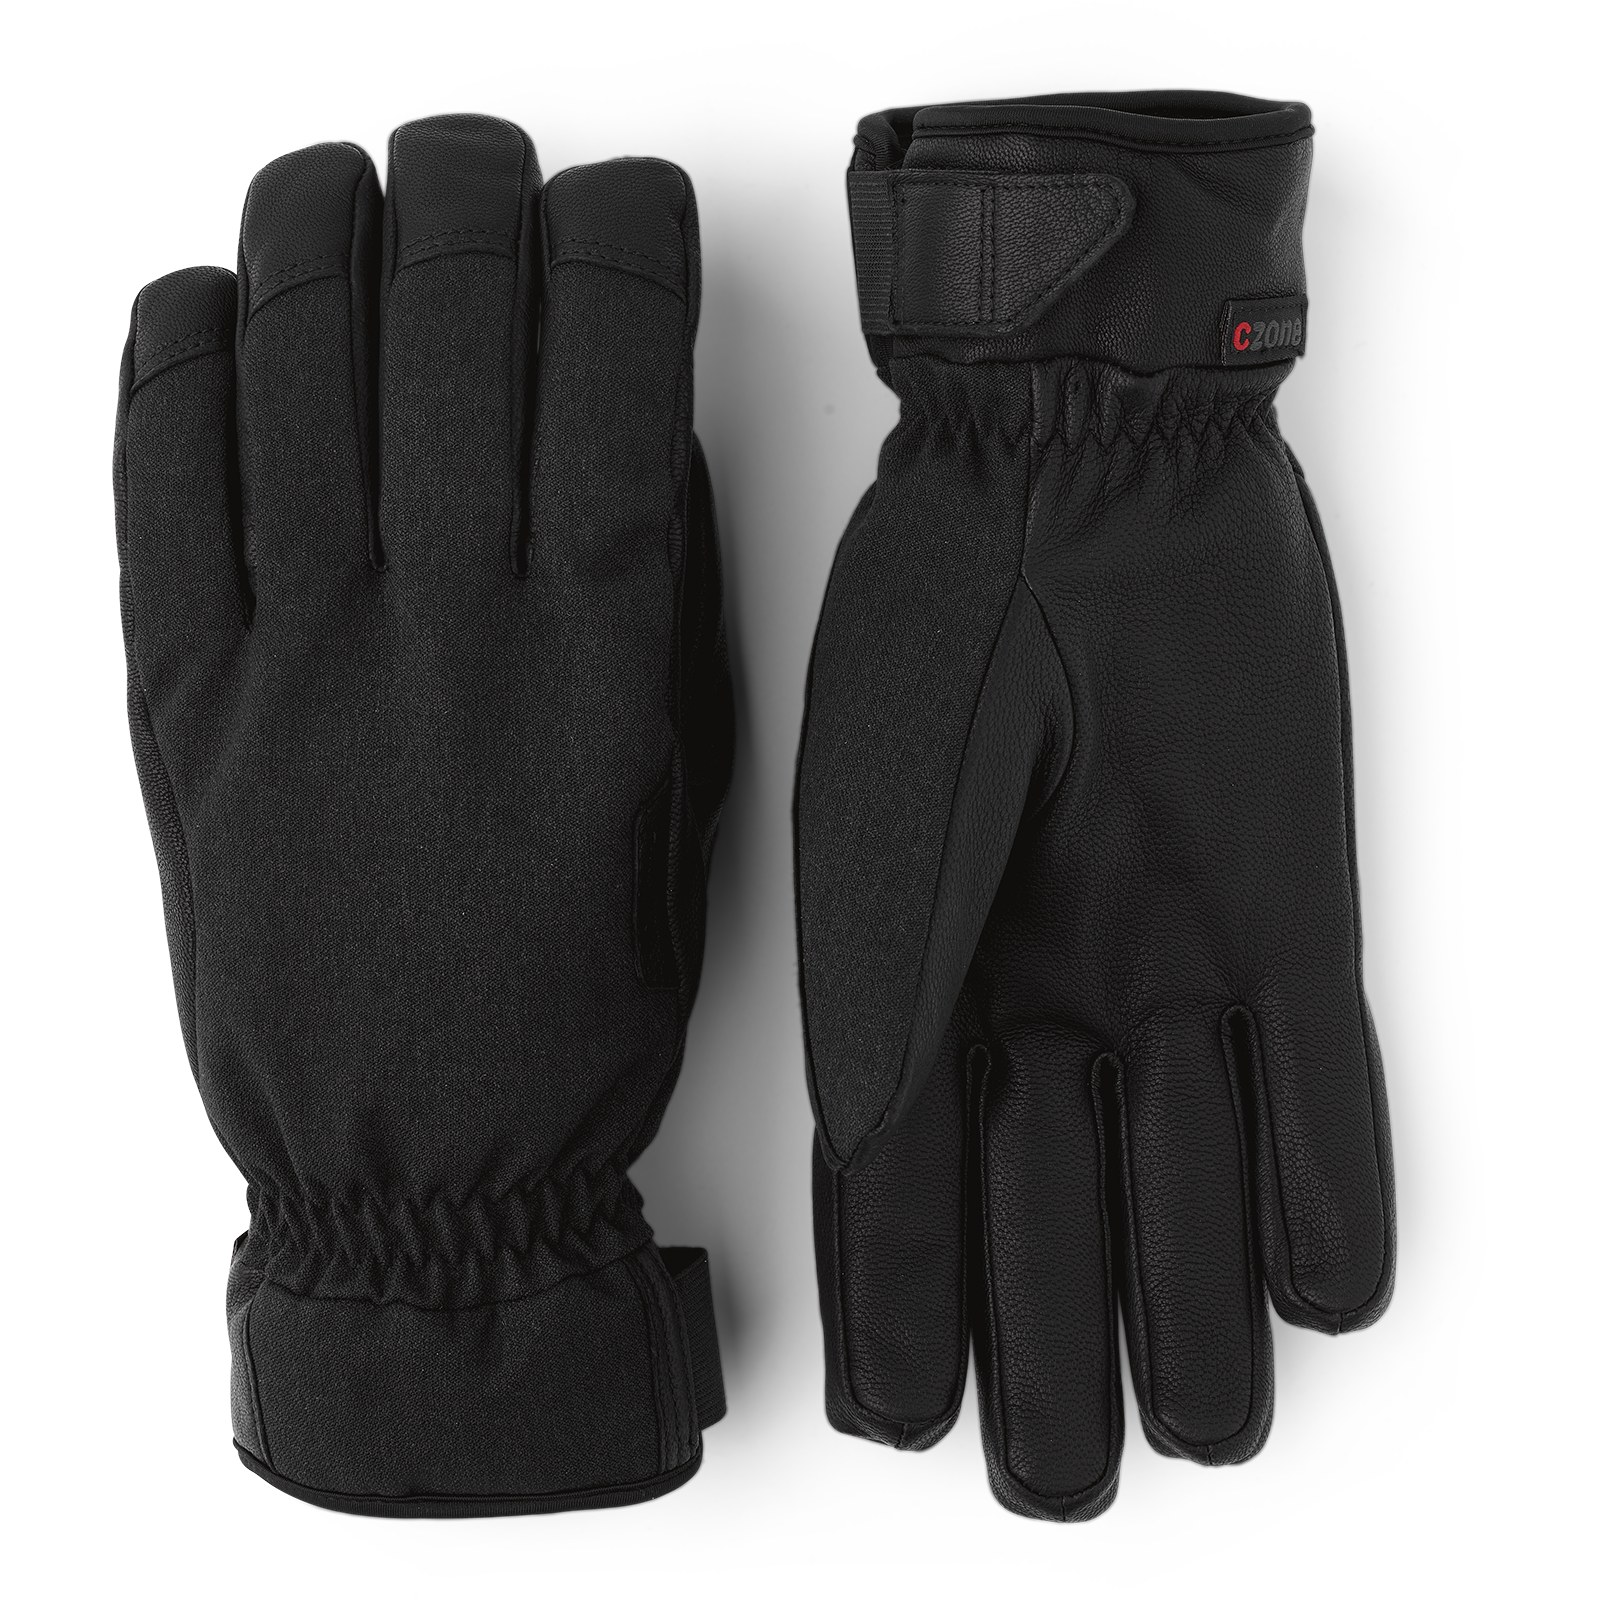 Picture of Hestra CZone Primaloft Flex - 5 Finger Ski Gloves - black